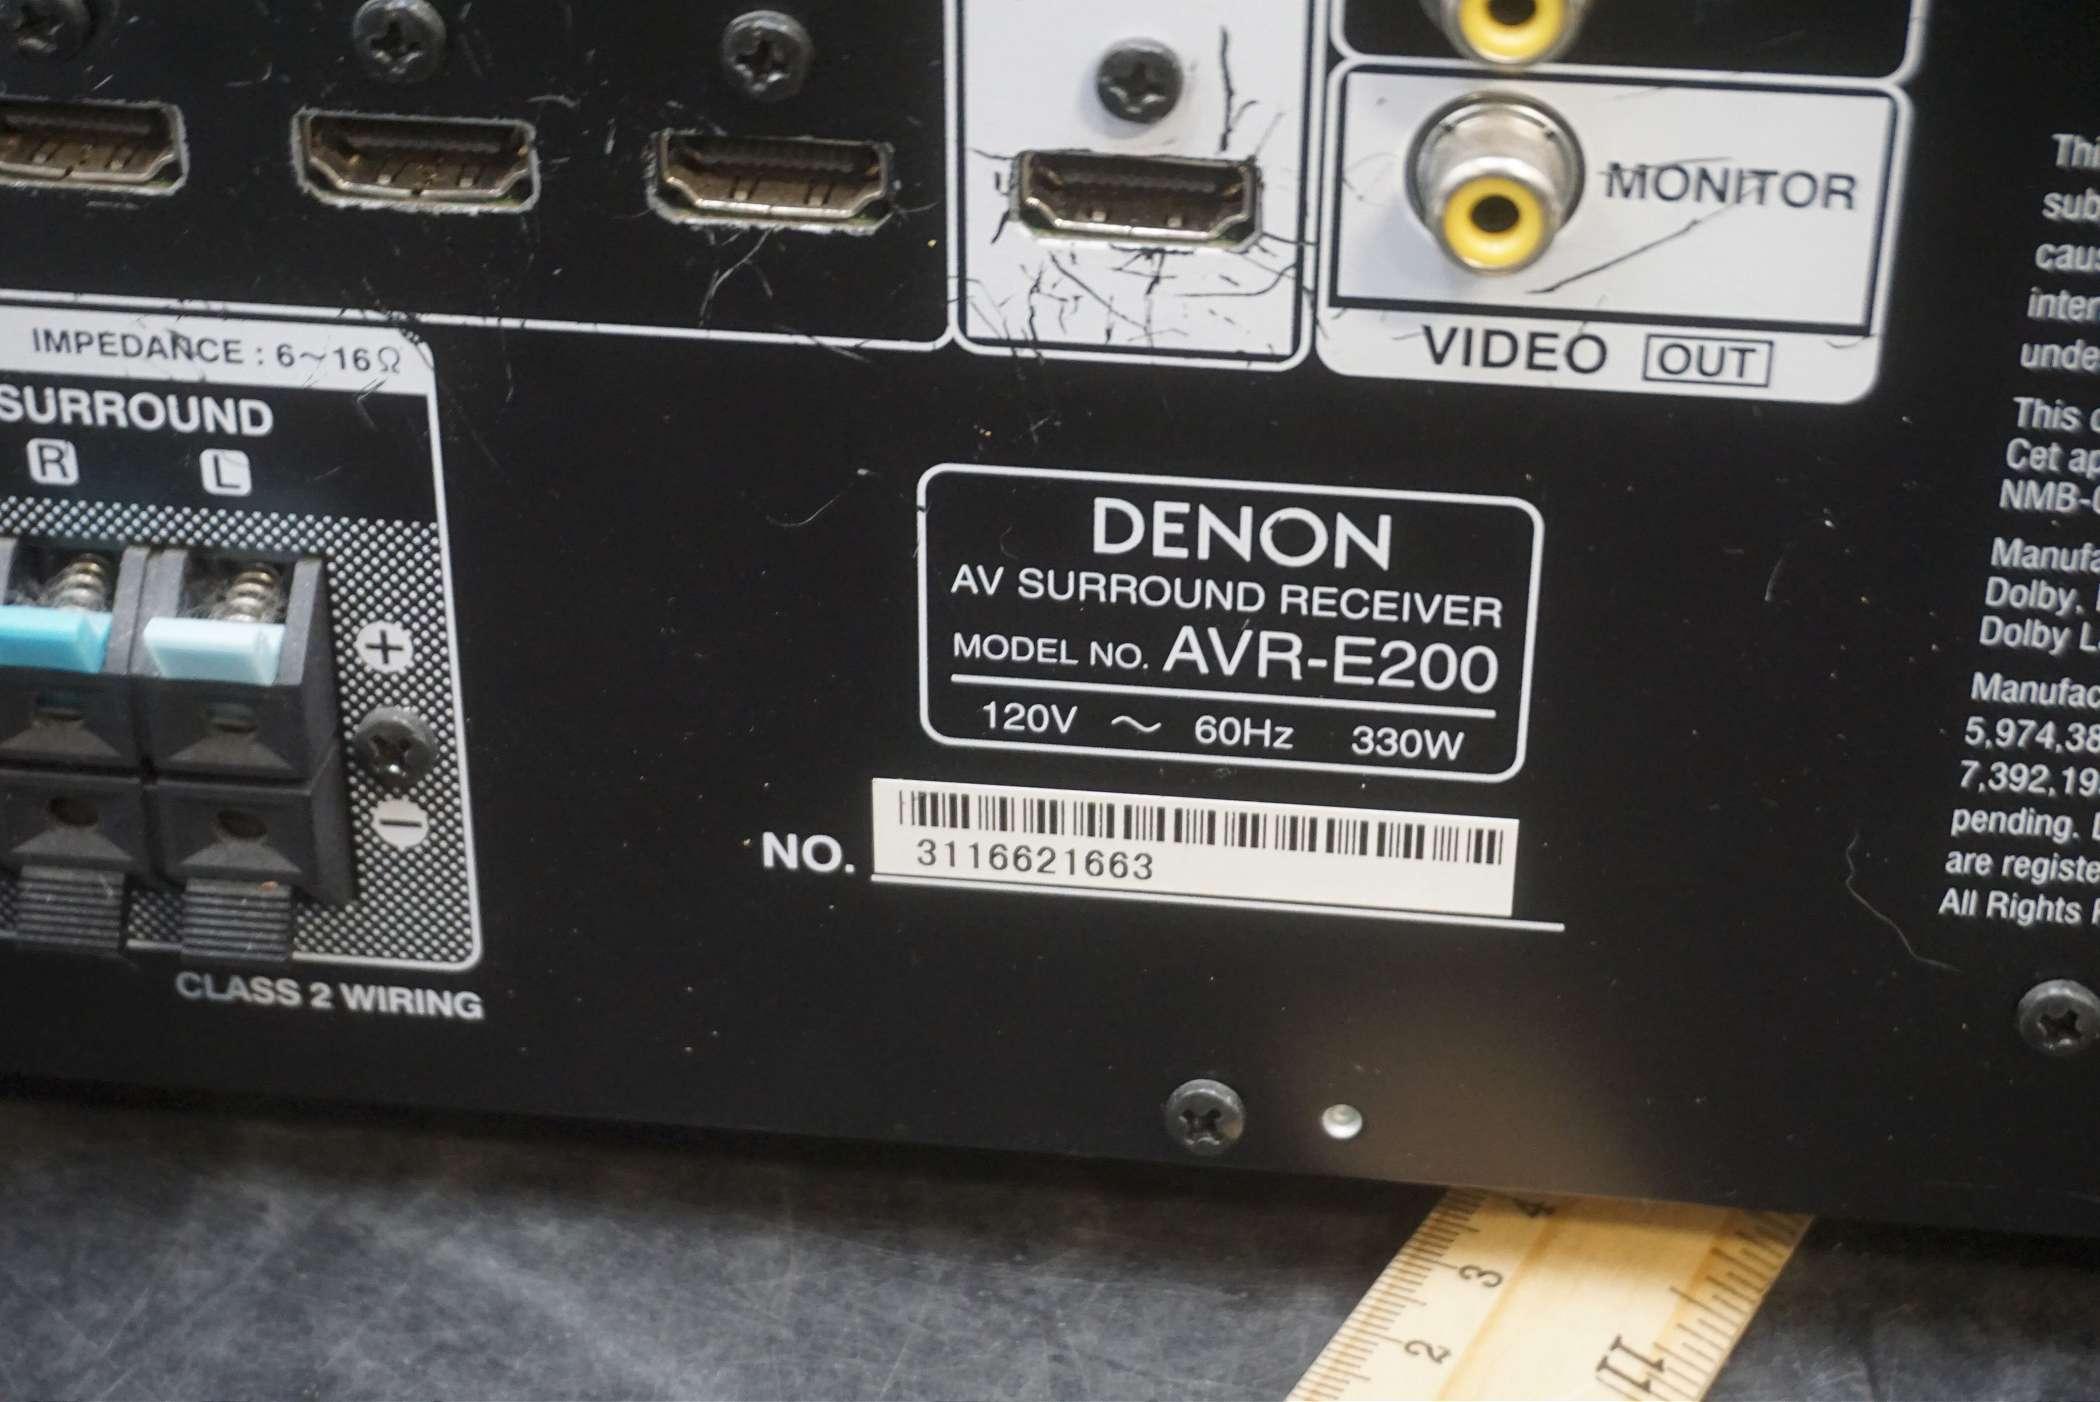 Denon AV Surround Receiver Model No. AVR-E200